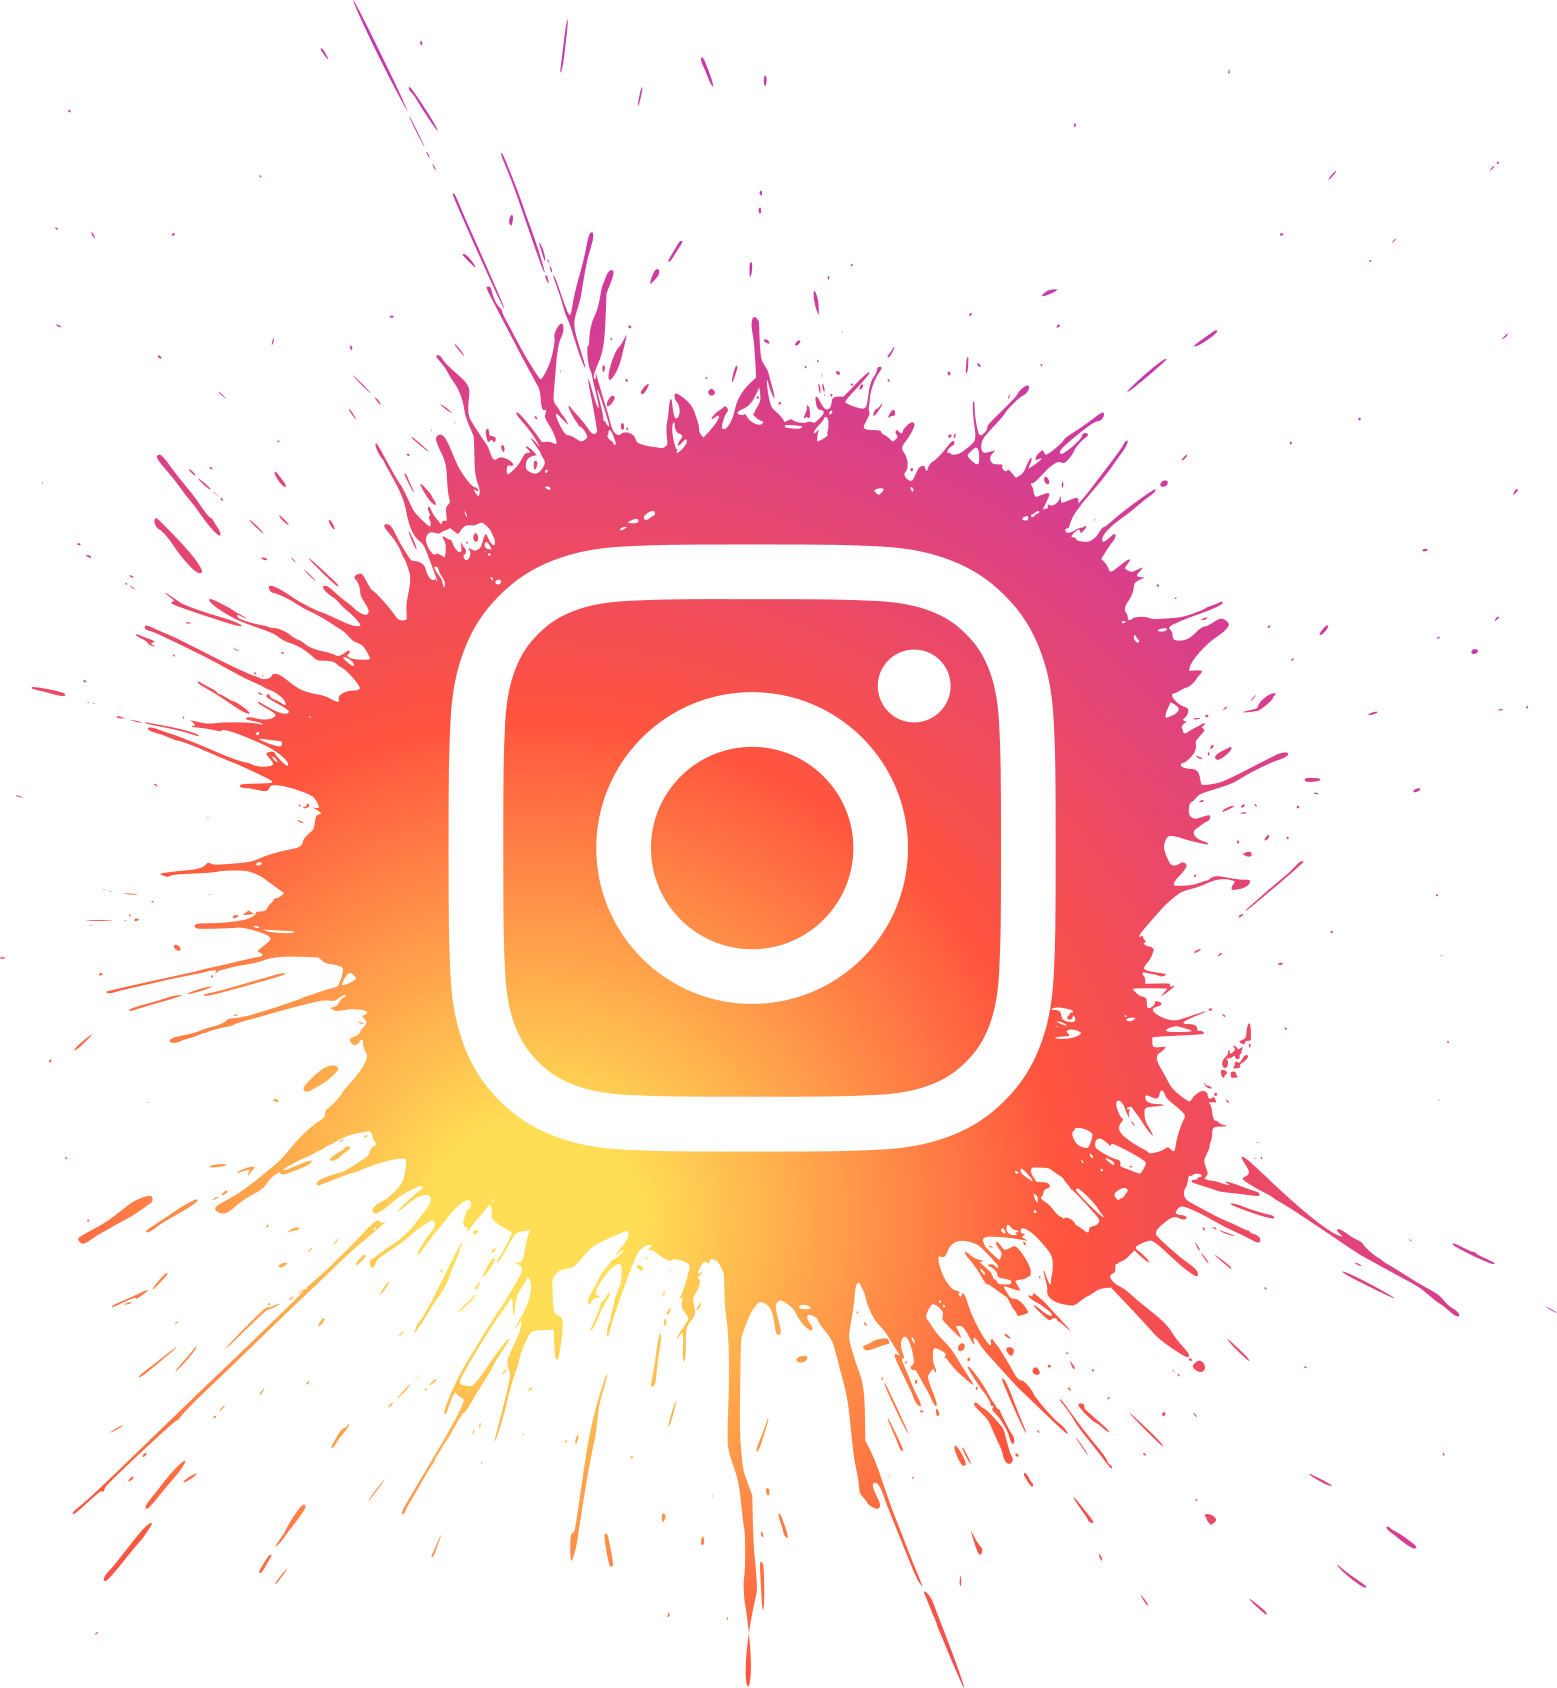 Instagram neon logo download in SVG or PNG - LogosArchive